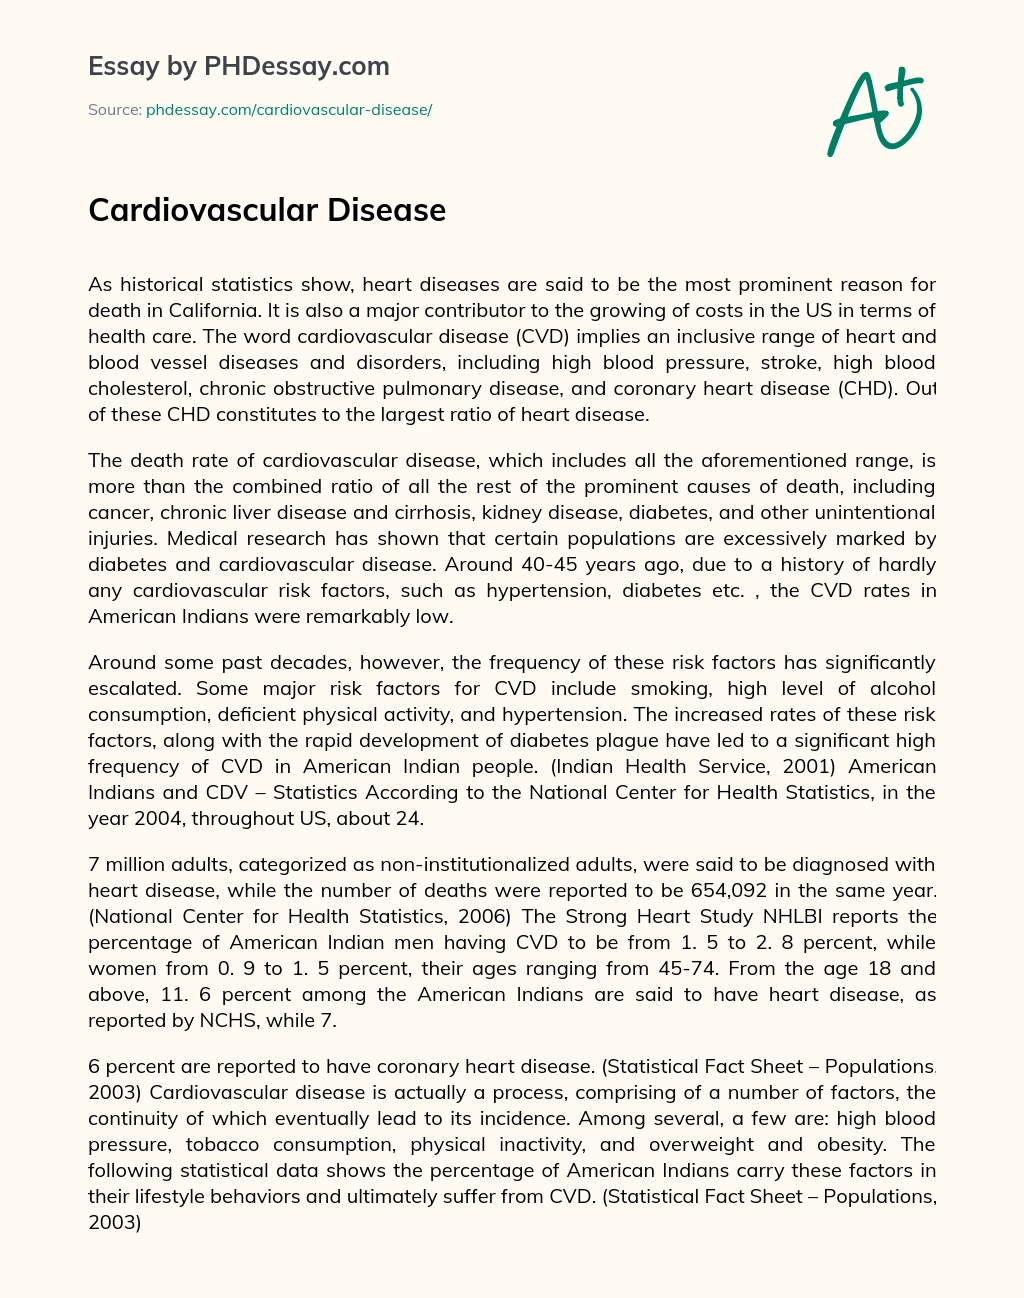 Cardiovascular Disease essay